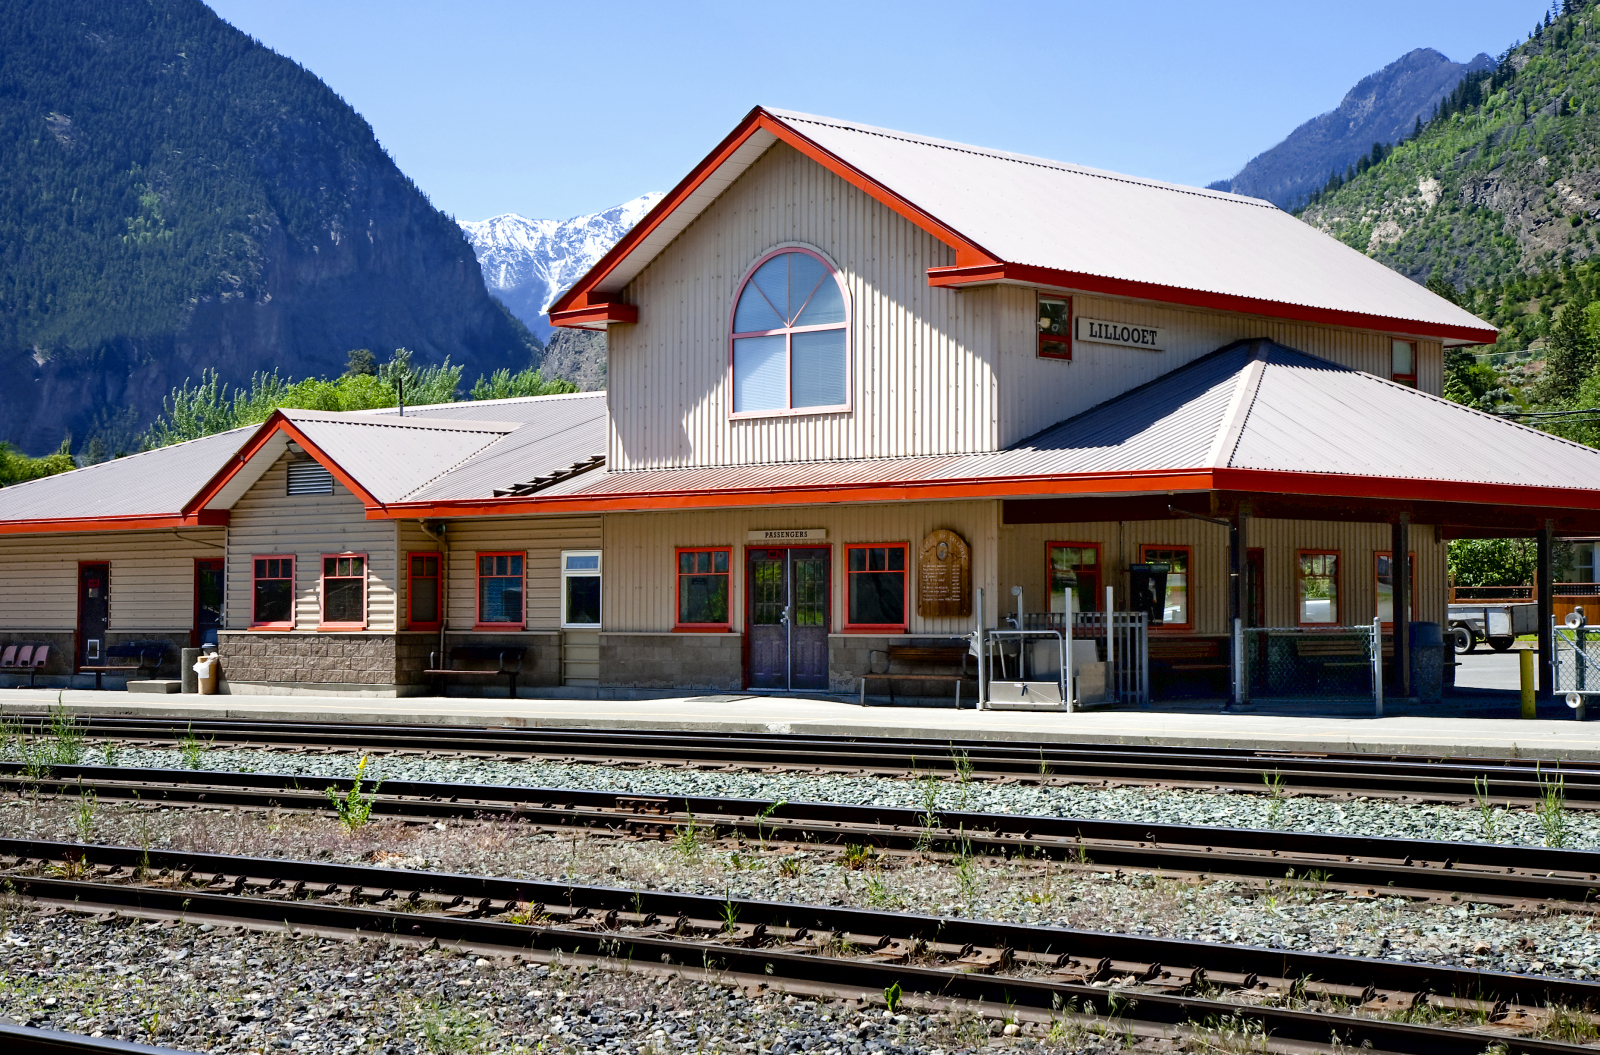 Railway station